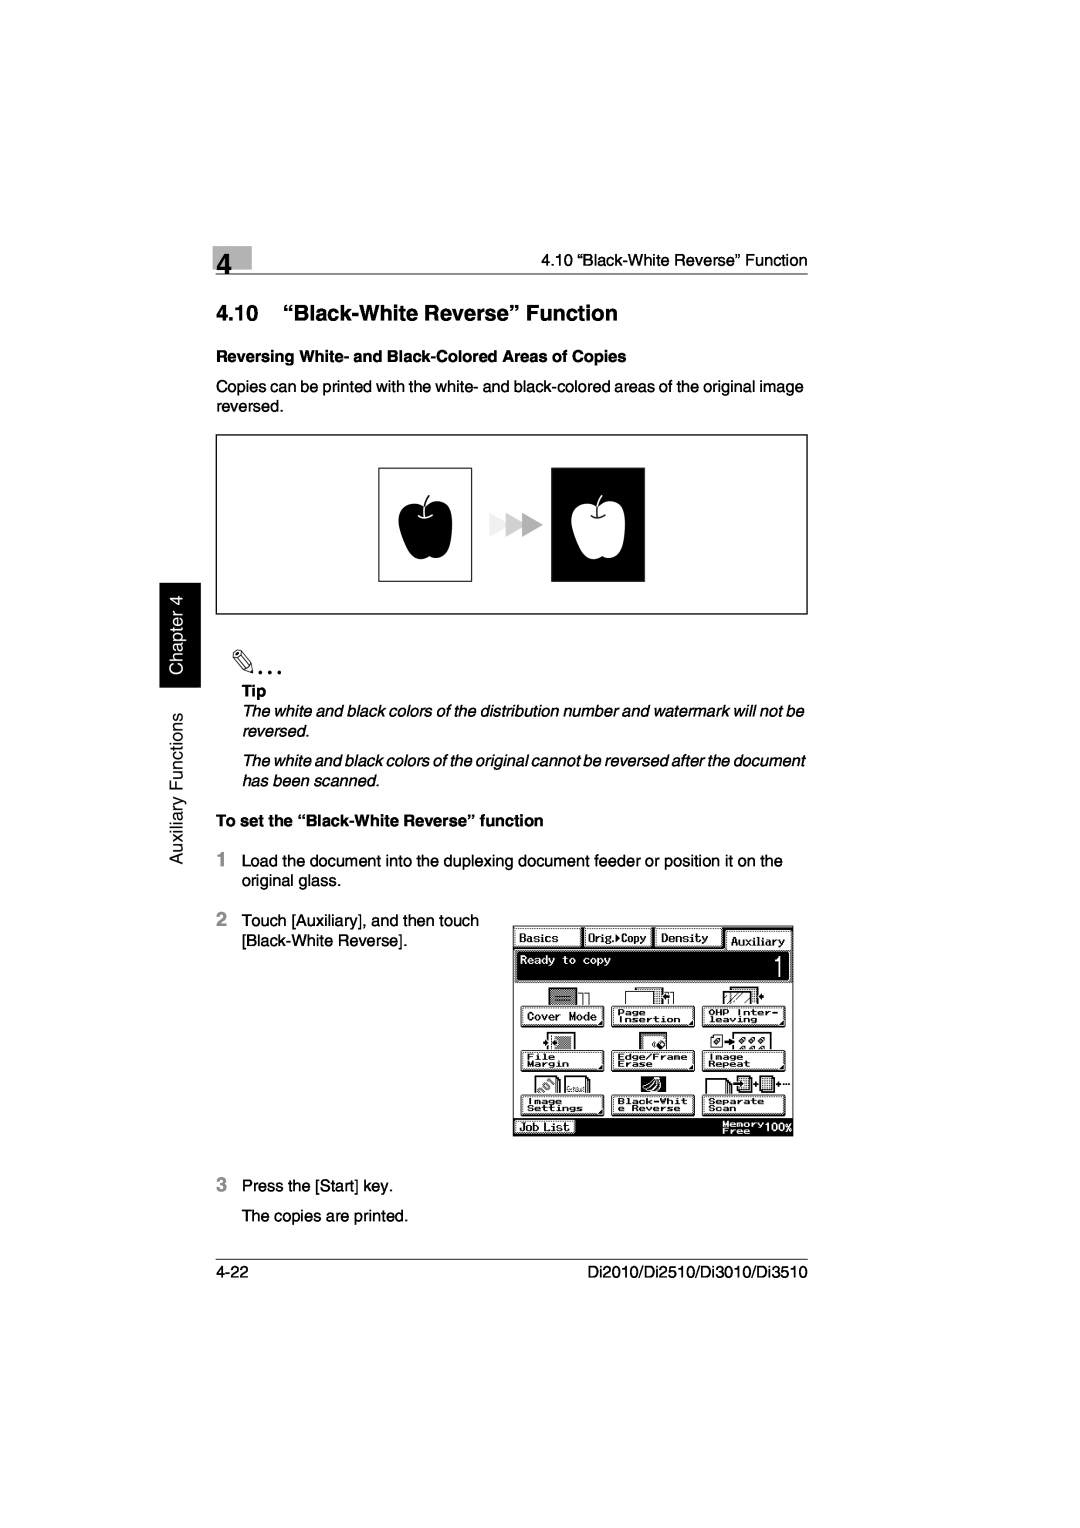 Minolta Di3510, DI2510, DI2010, DI3010 user manual 4.10 “Black-White Reverse” Function, Auxiliary Functions Chapter 